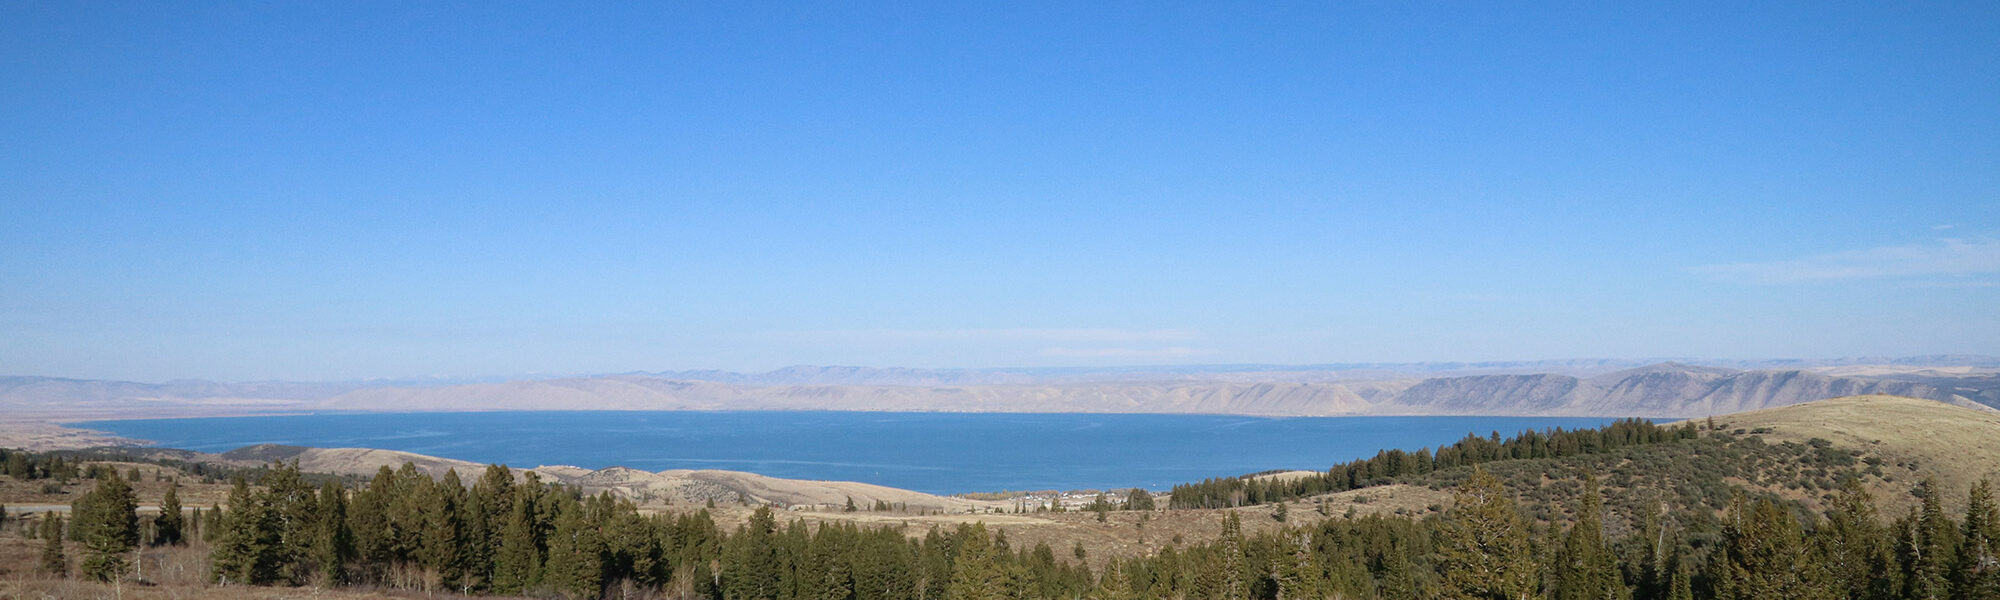 Amerika dag 1: Uitzicht op Bear Lake